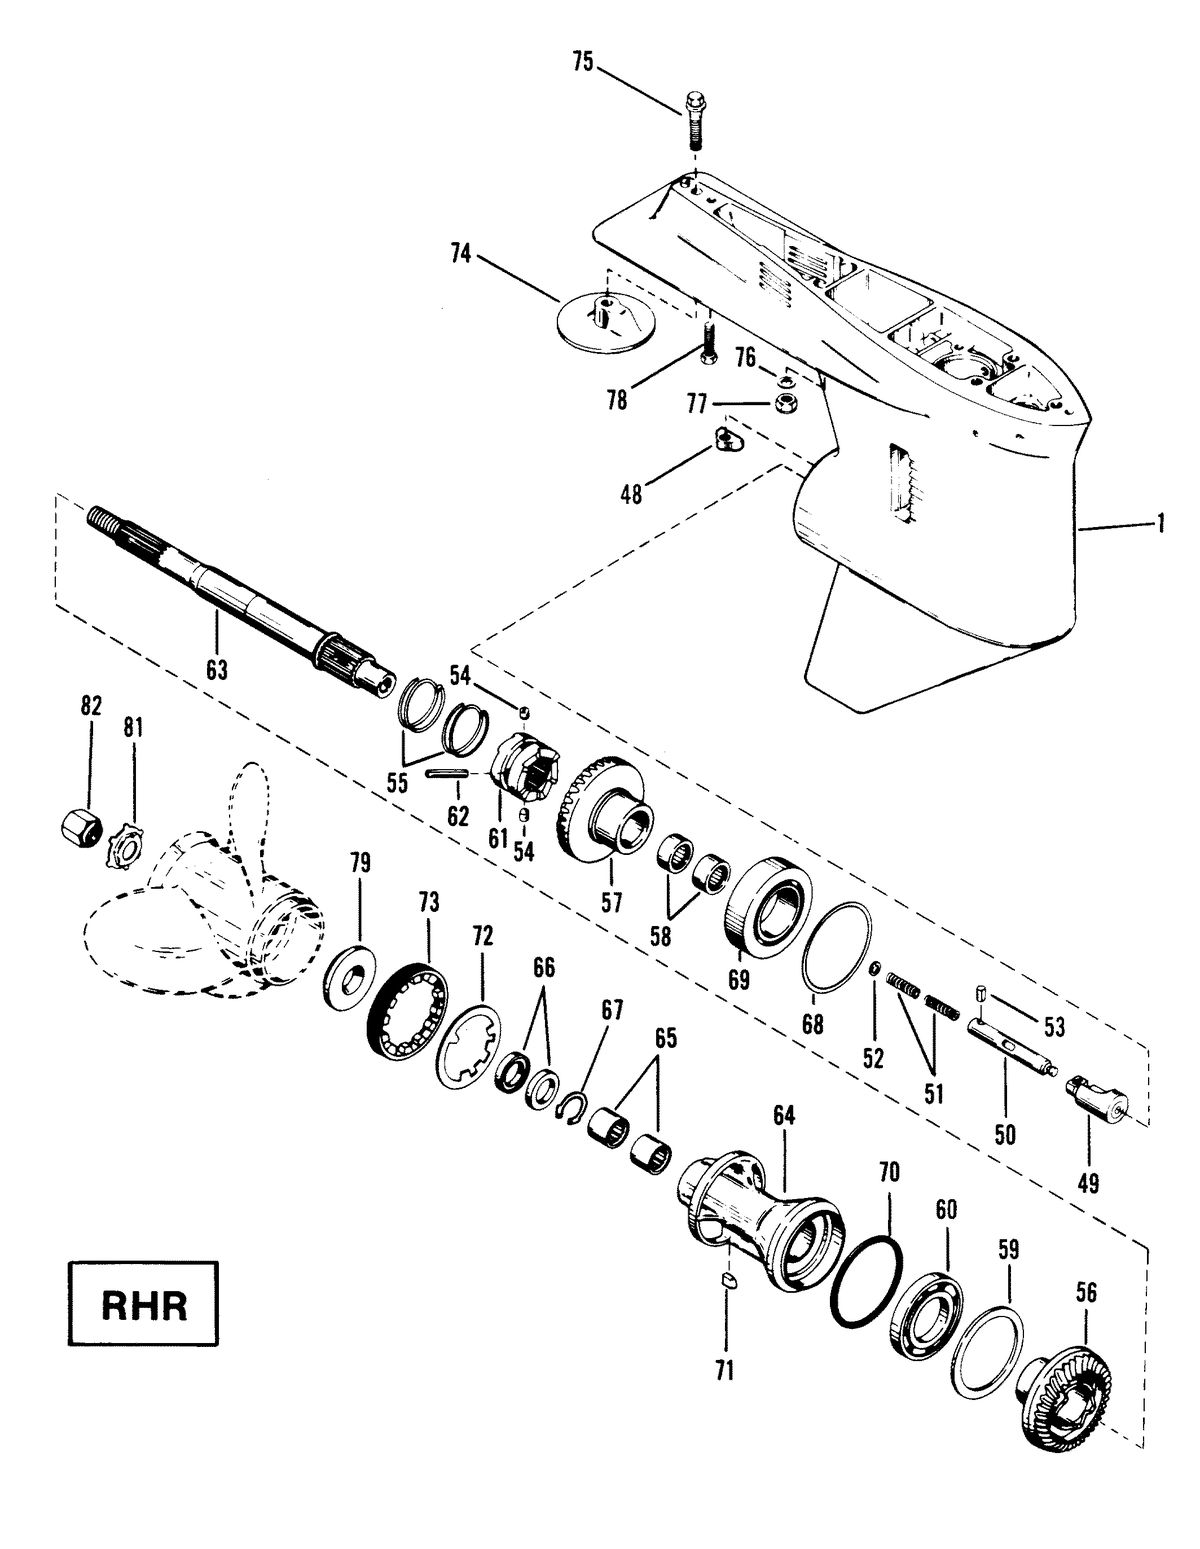 RACE OUTBOARD XR-2 GEAR HOUSING (PROPELLER SHAFT) (RHR)